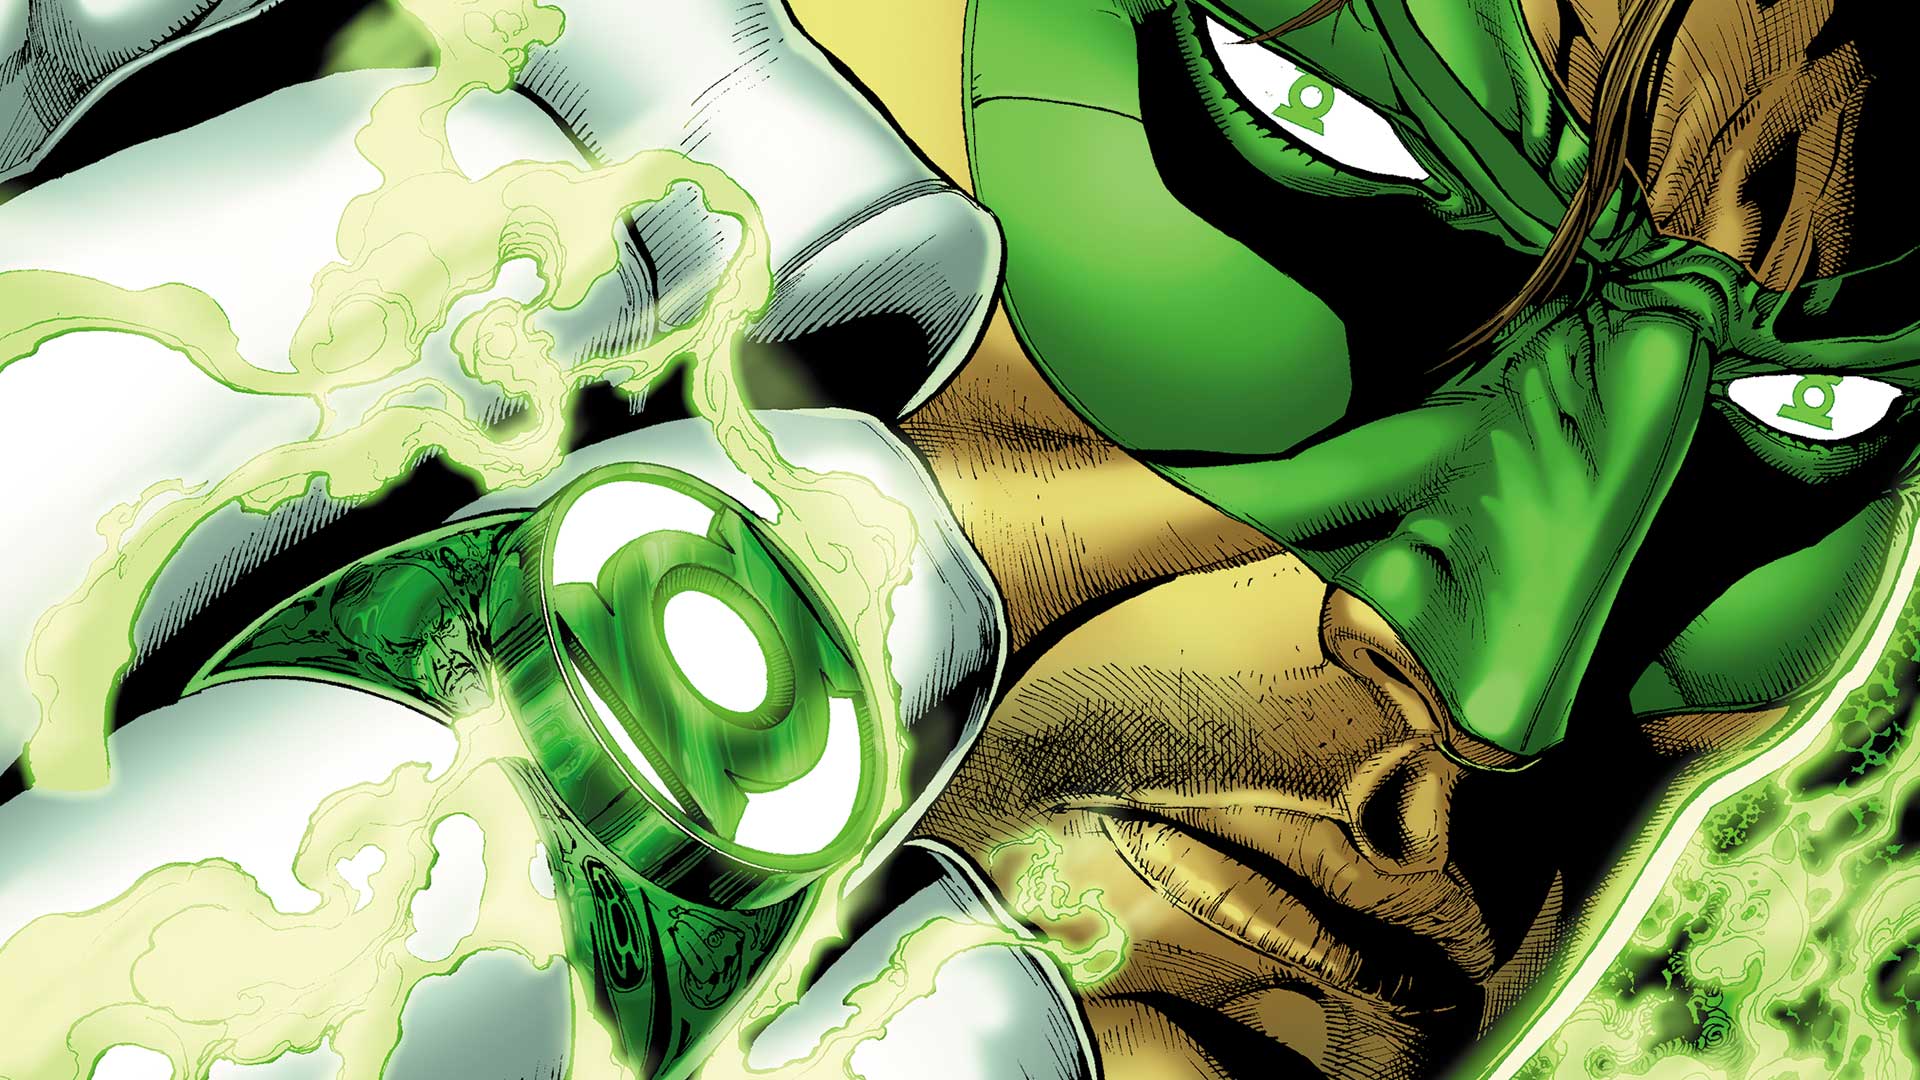 Robert Venditti stays green with Hal Jordan and Green Lantern